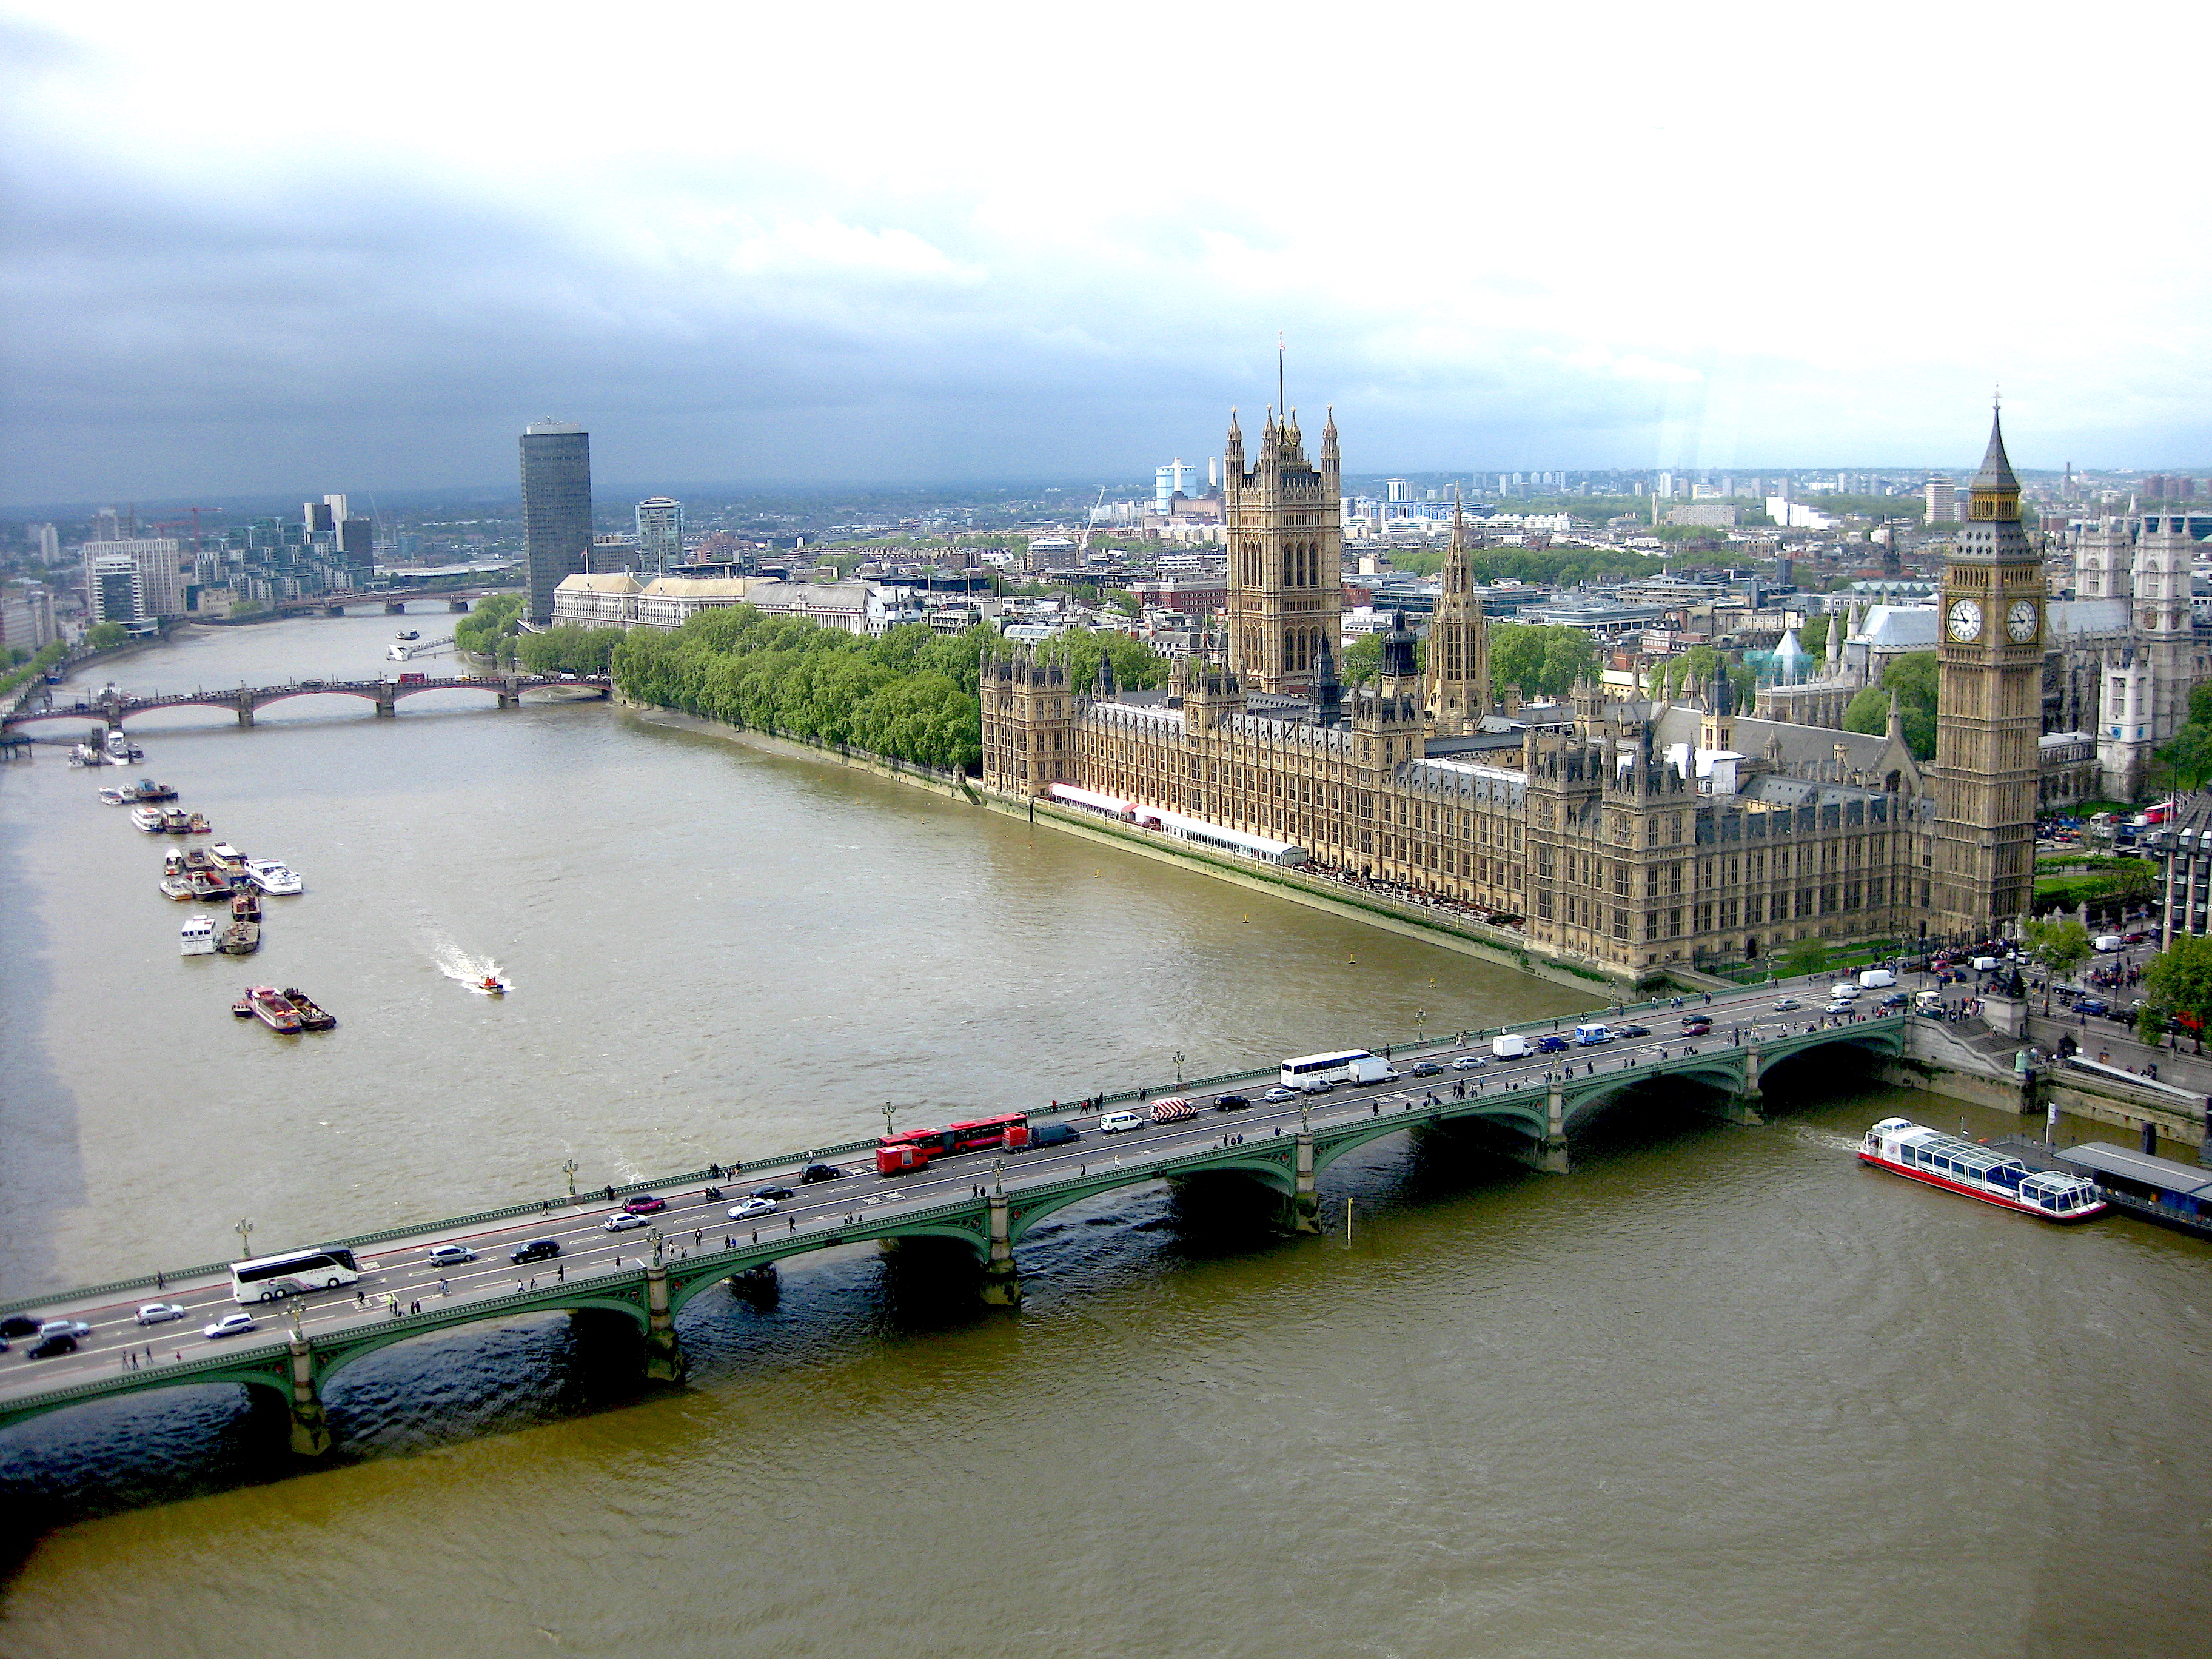 Westminster_Bridge_and_Palace - Flirckr Paulo Ordoveza